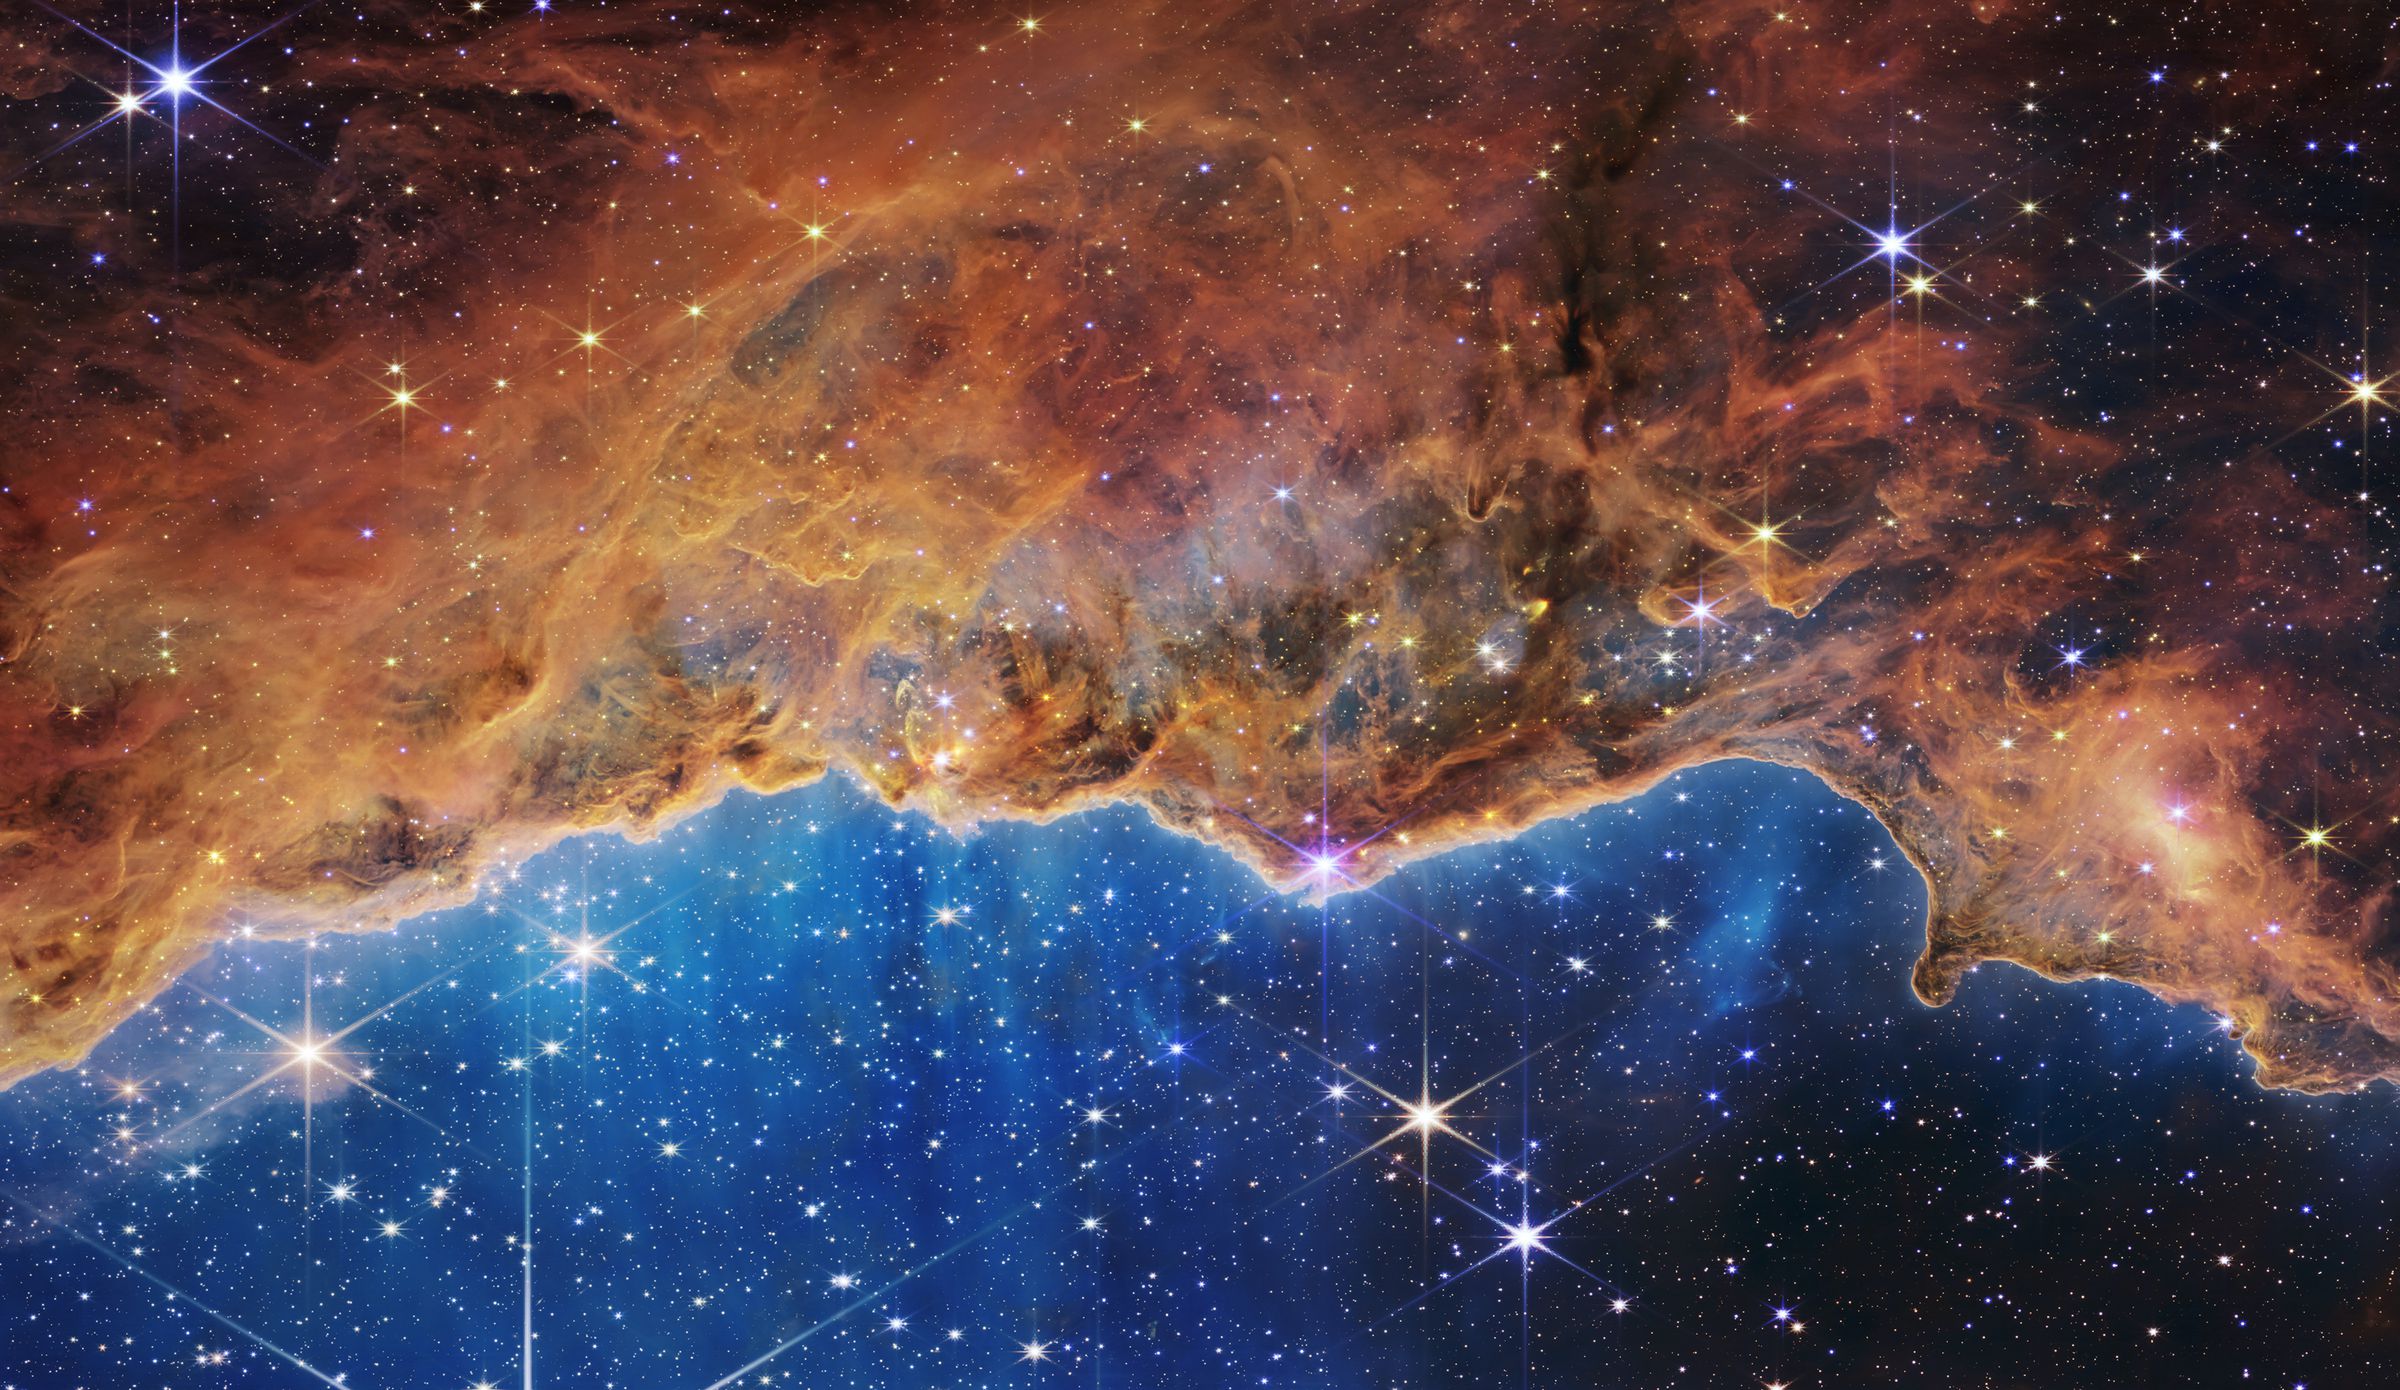 the popular image of the carina nebula, but flipped